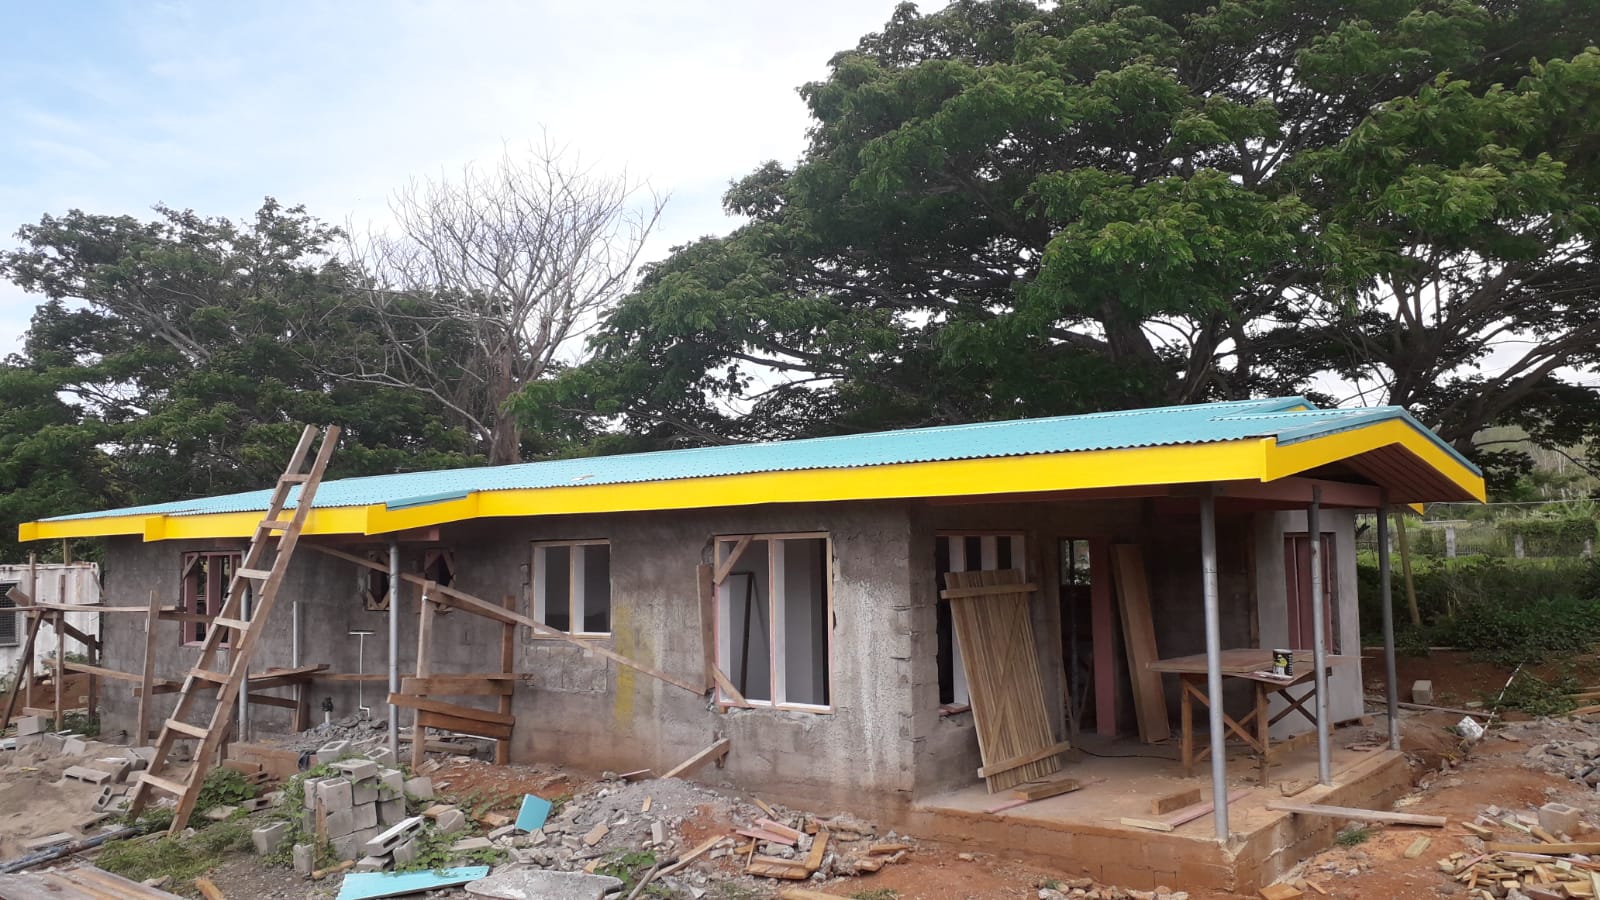 Shelter progress picture December 2019